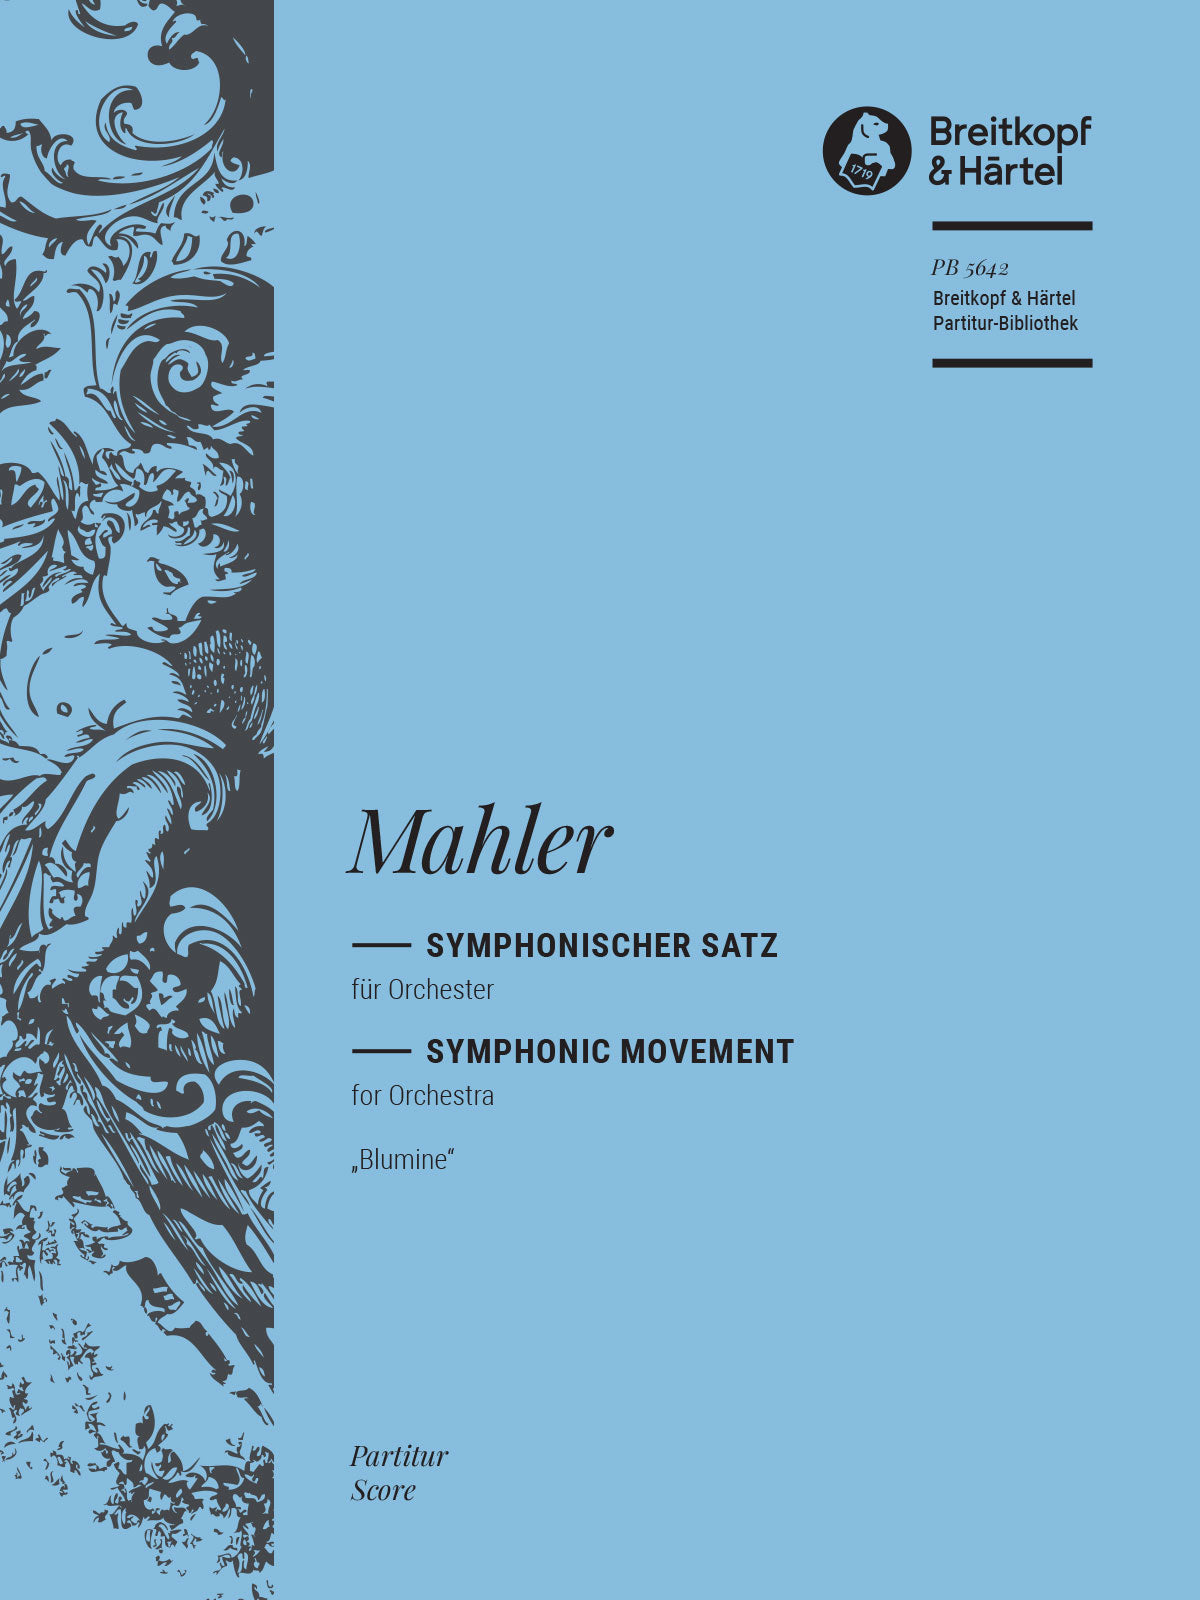 Mahler: Symphonic Movement "Blumine"